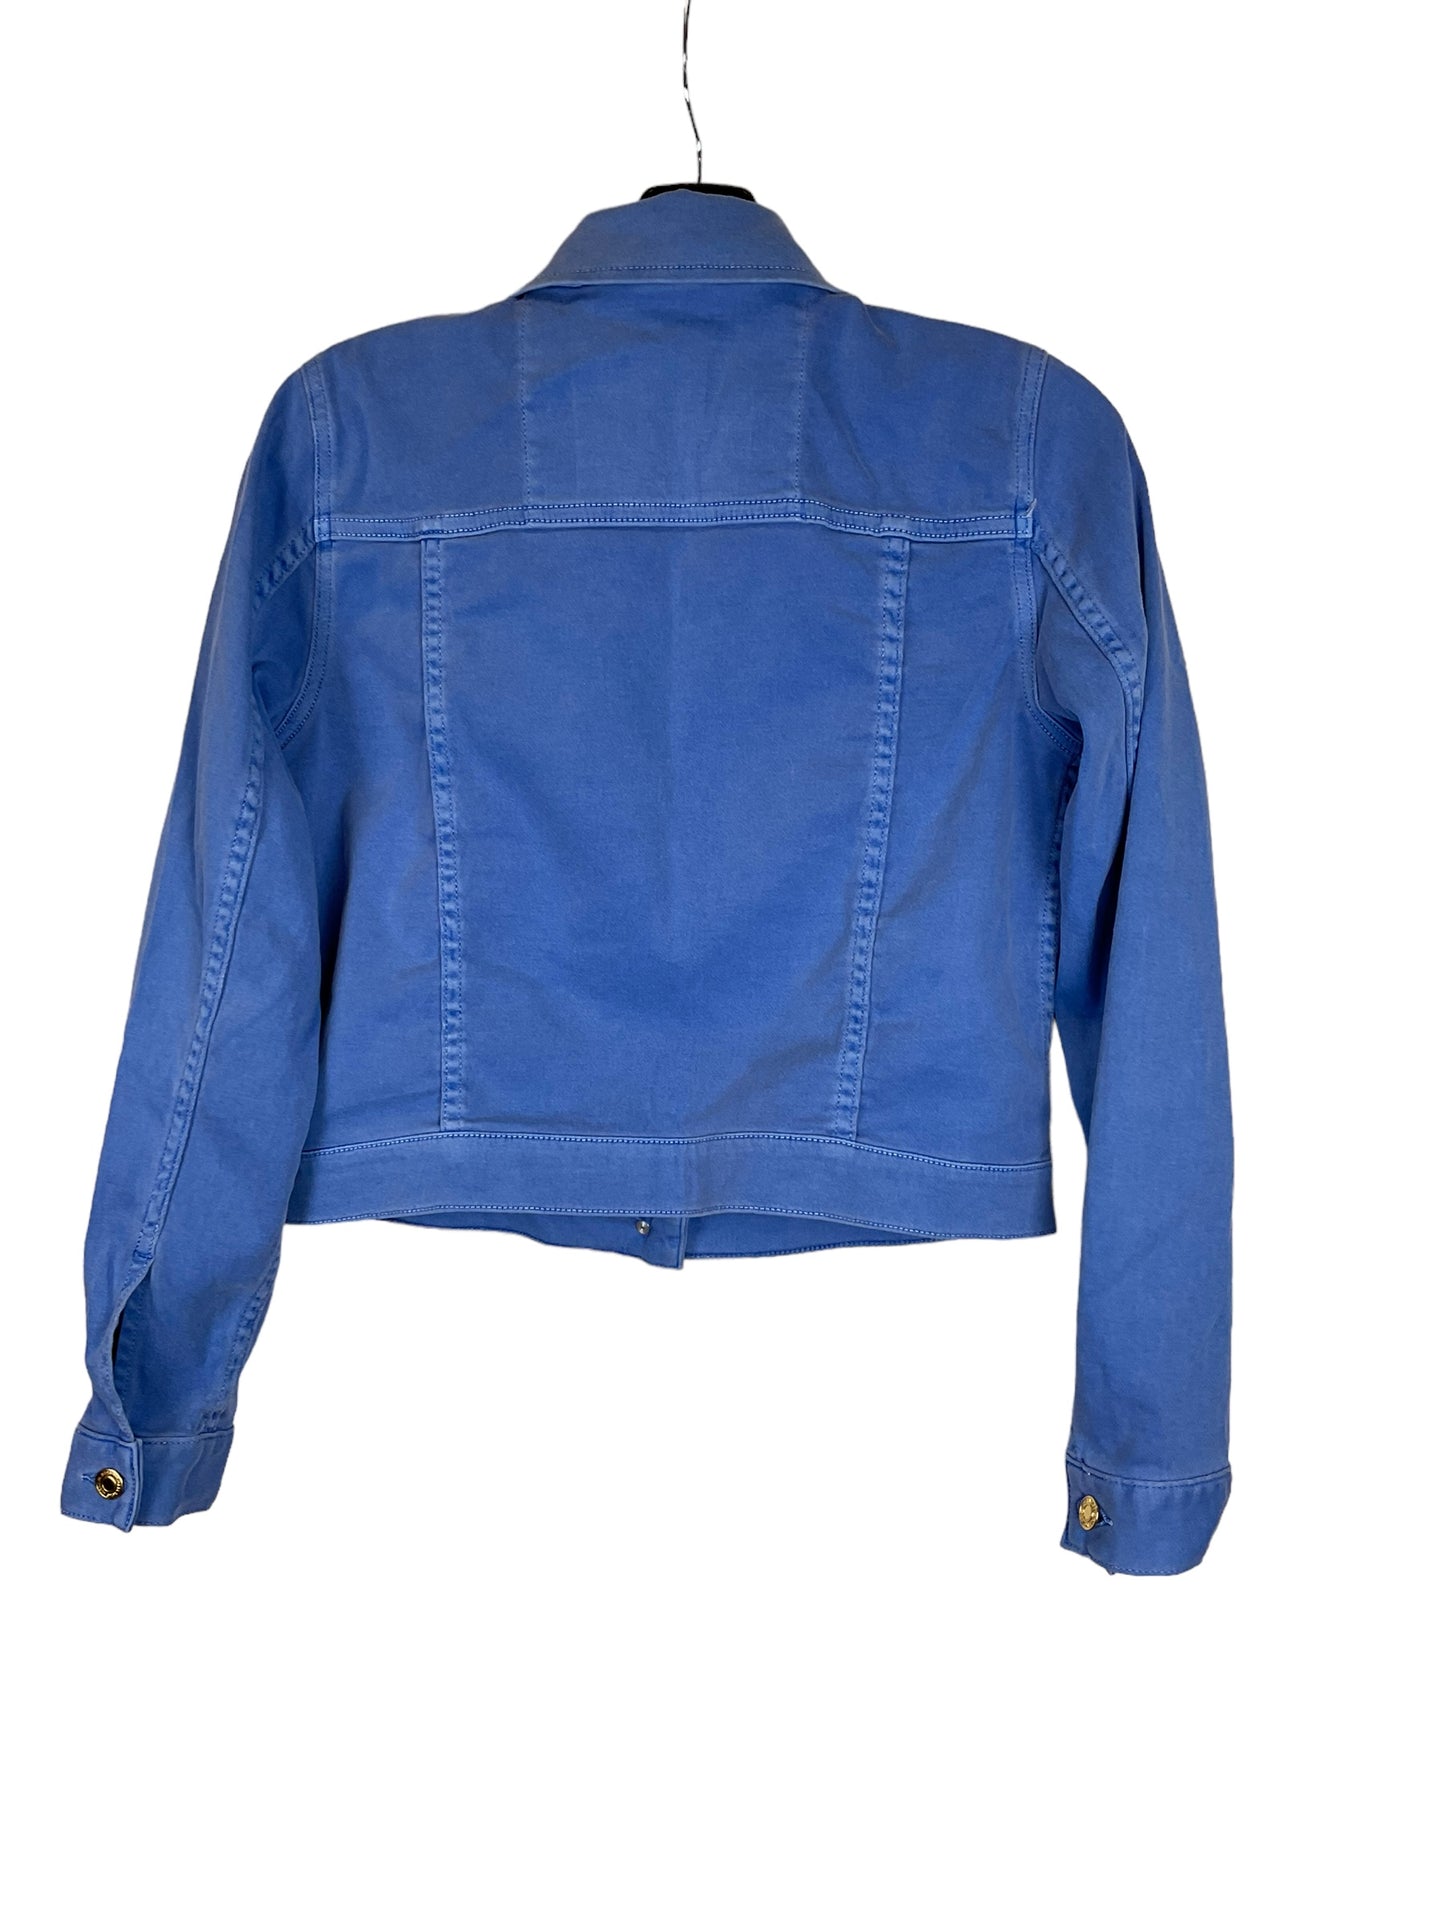 Jacket Denim By Michael By Michael Kors  Size: S